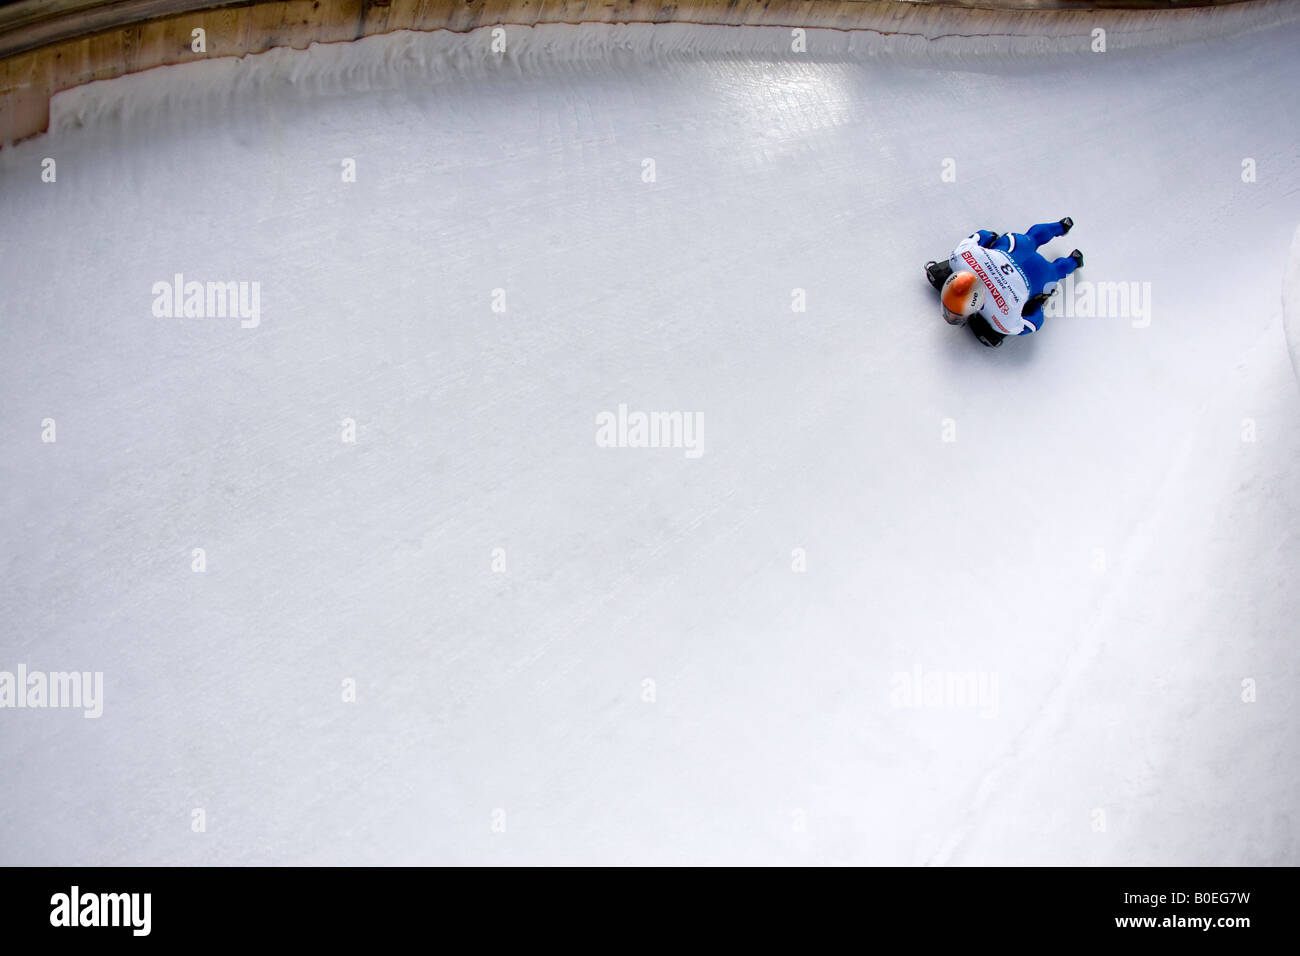 A Skeleton racer sliding down the Olympic run at St Moritz Switzerland Stock Photo